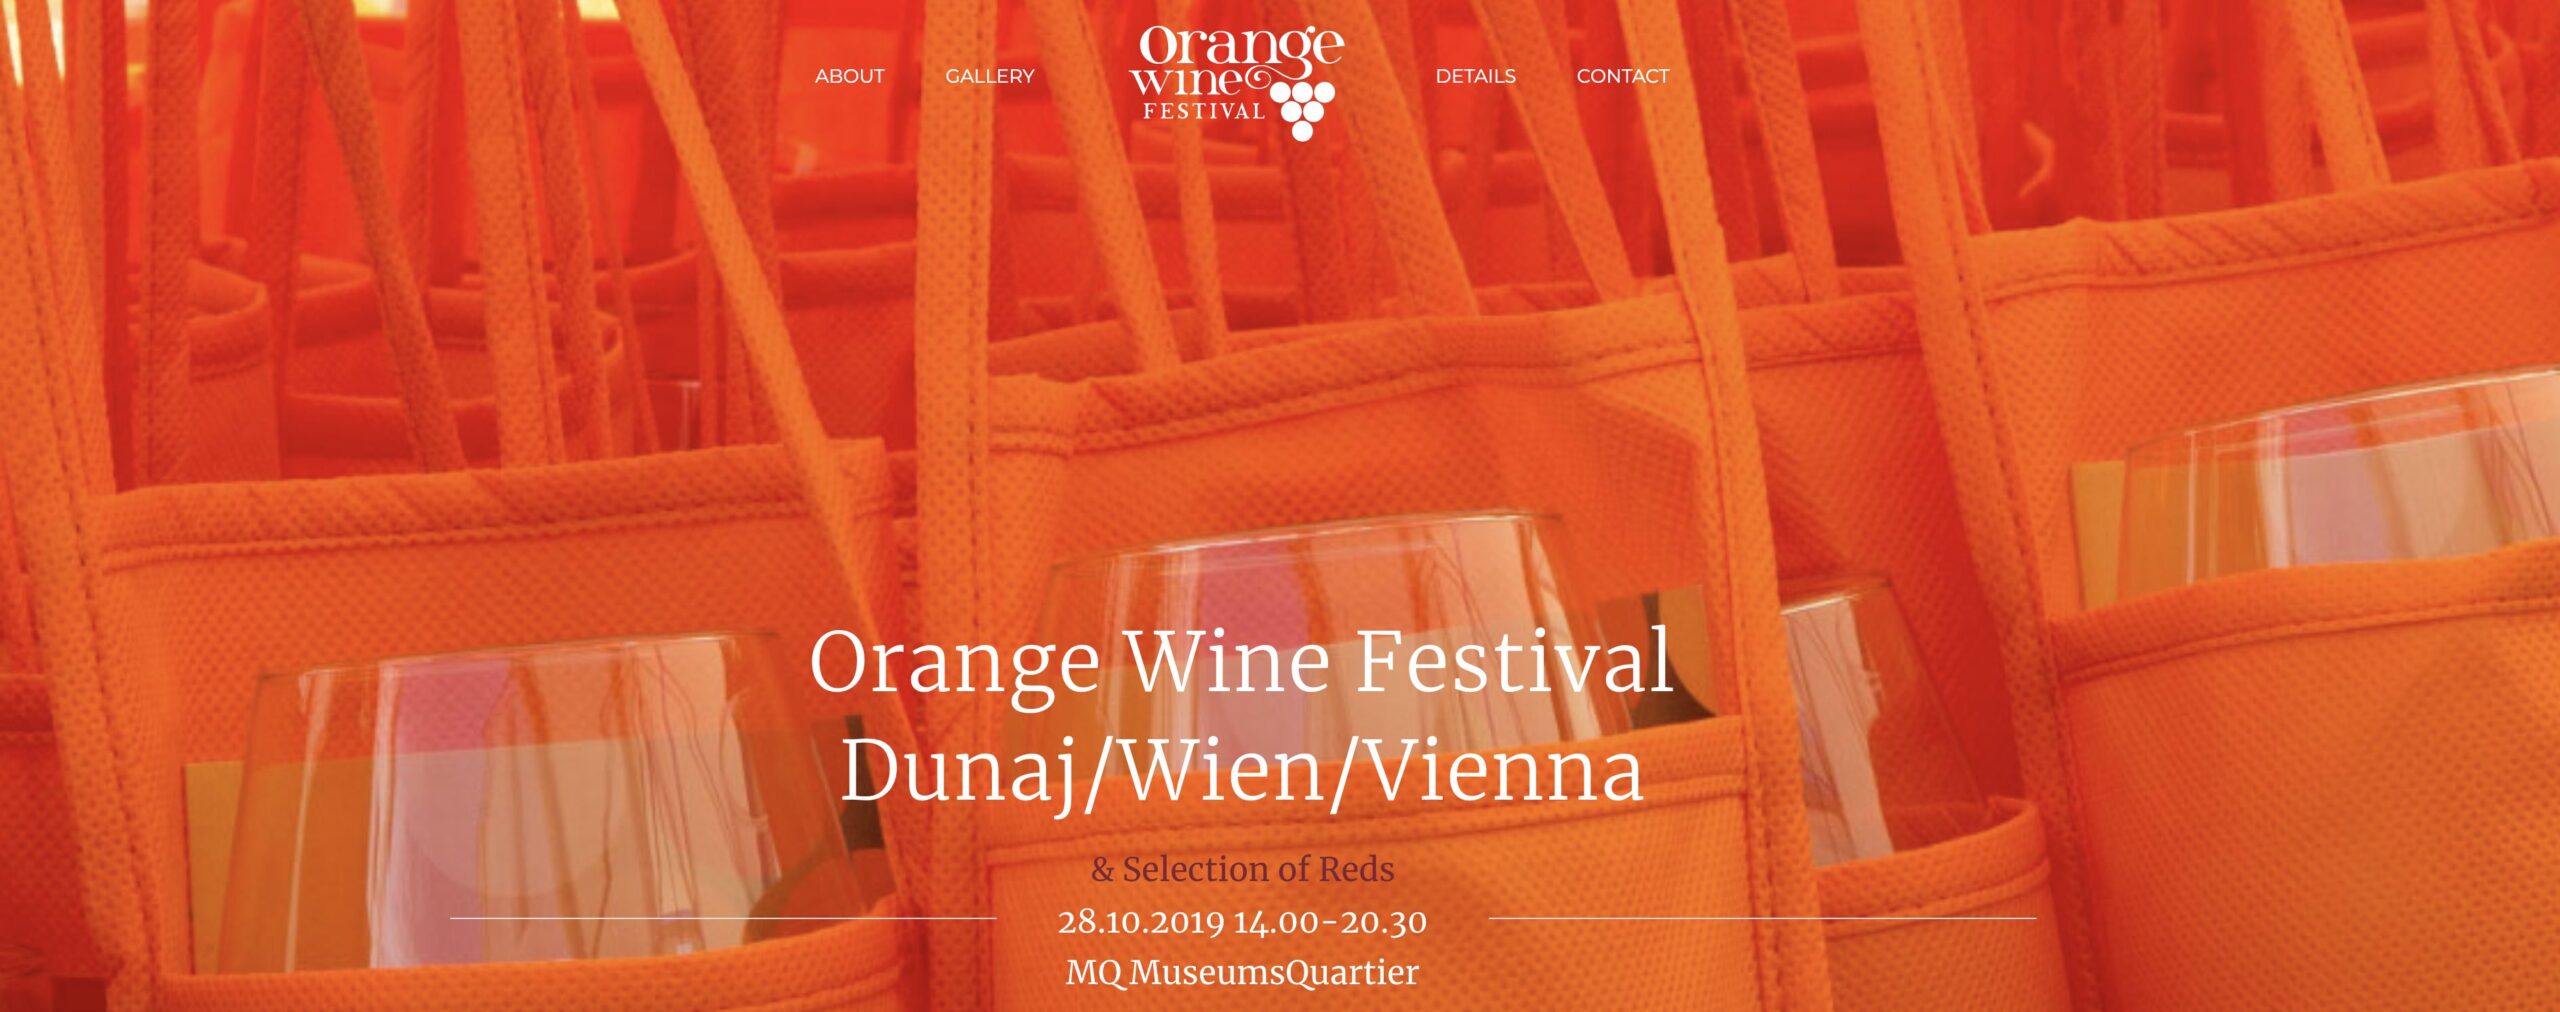 Orange wine festival